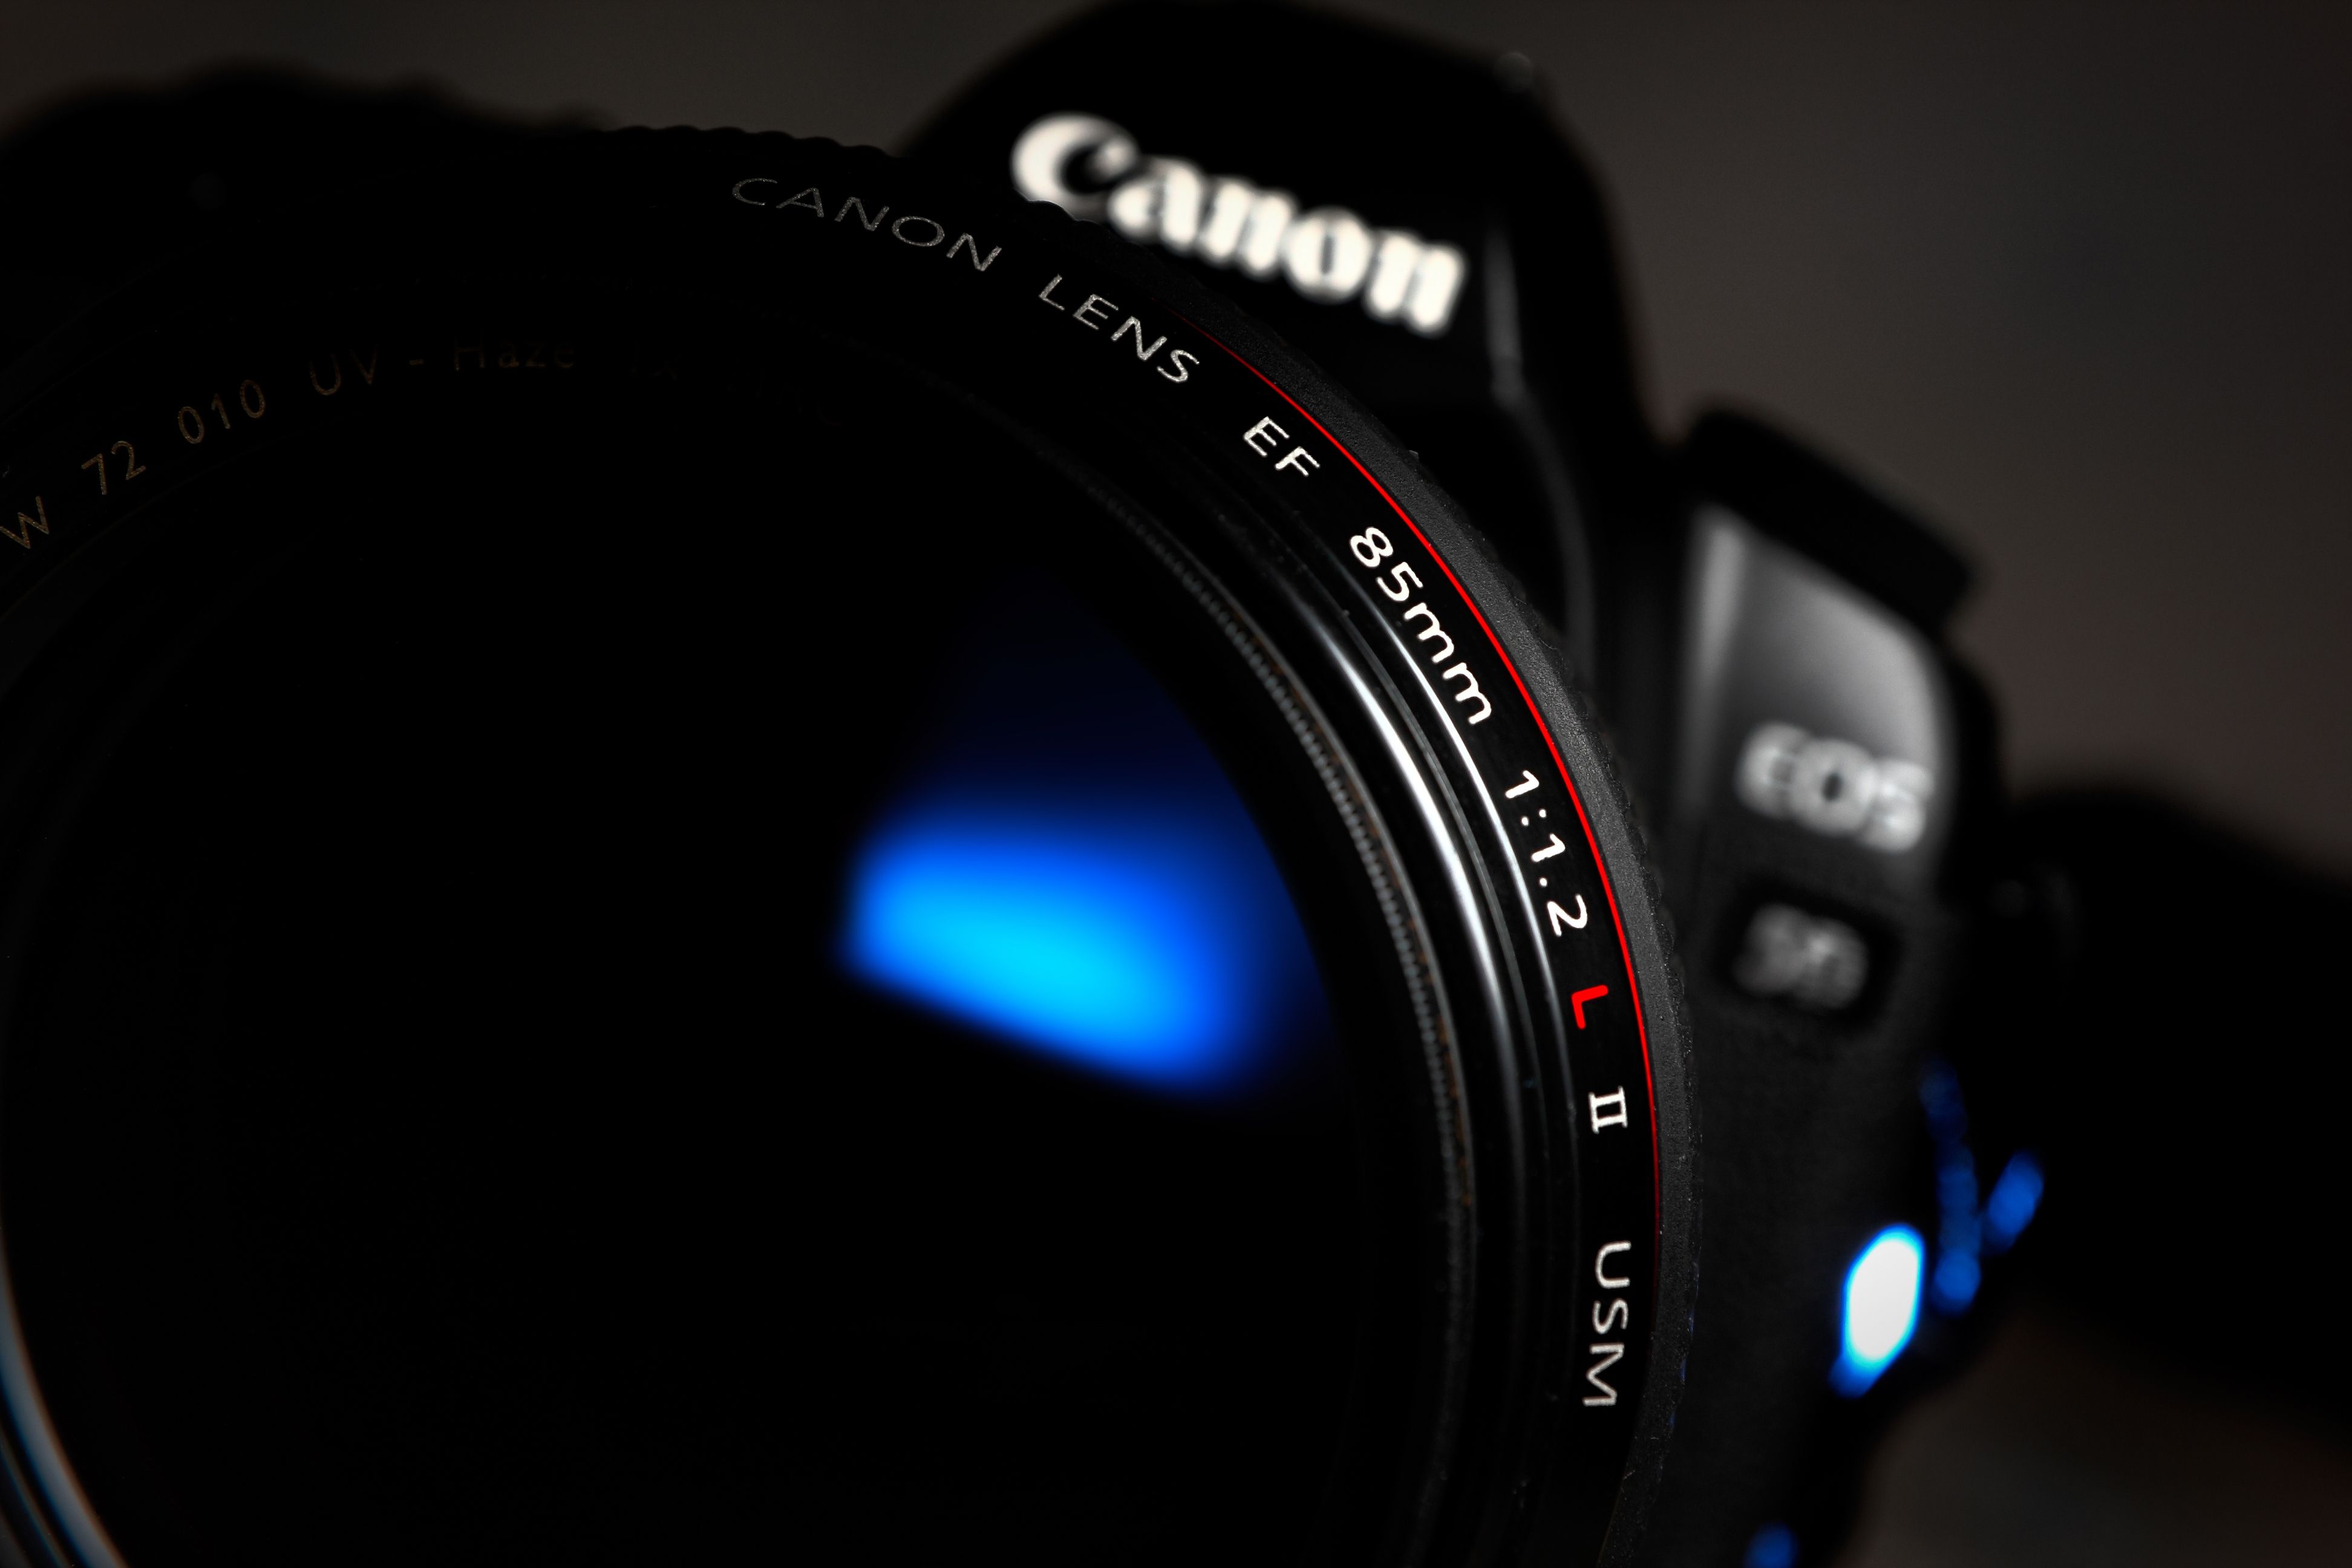 Dslr Camera Lens Canon Dslr Lens Camera HD Widescreen Wallpaper High Quality Pc. Camera wallpaper, Canon camera, Photography camera